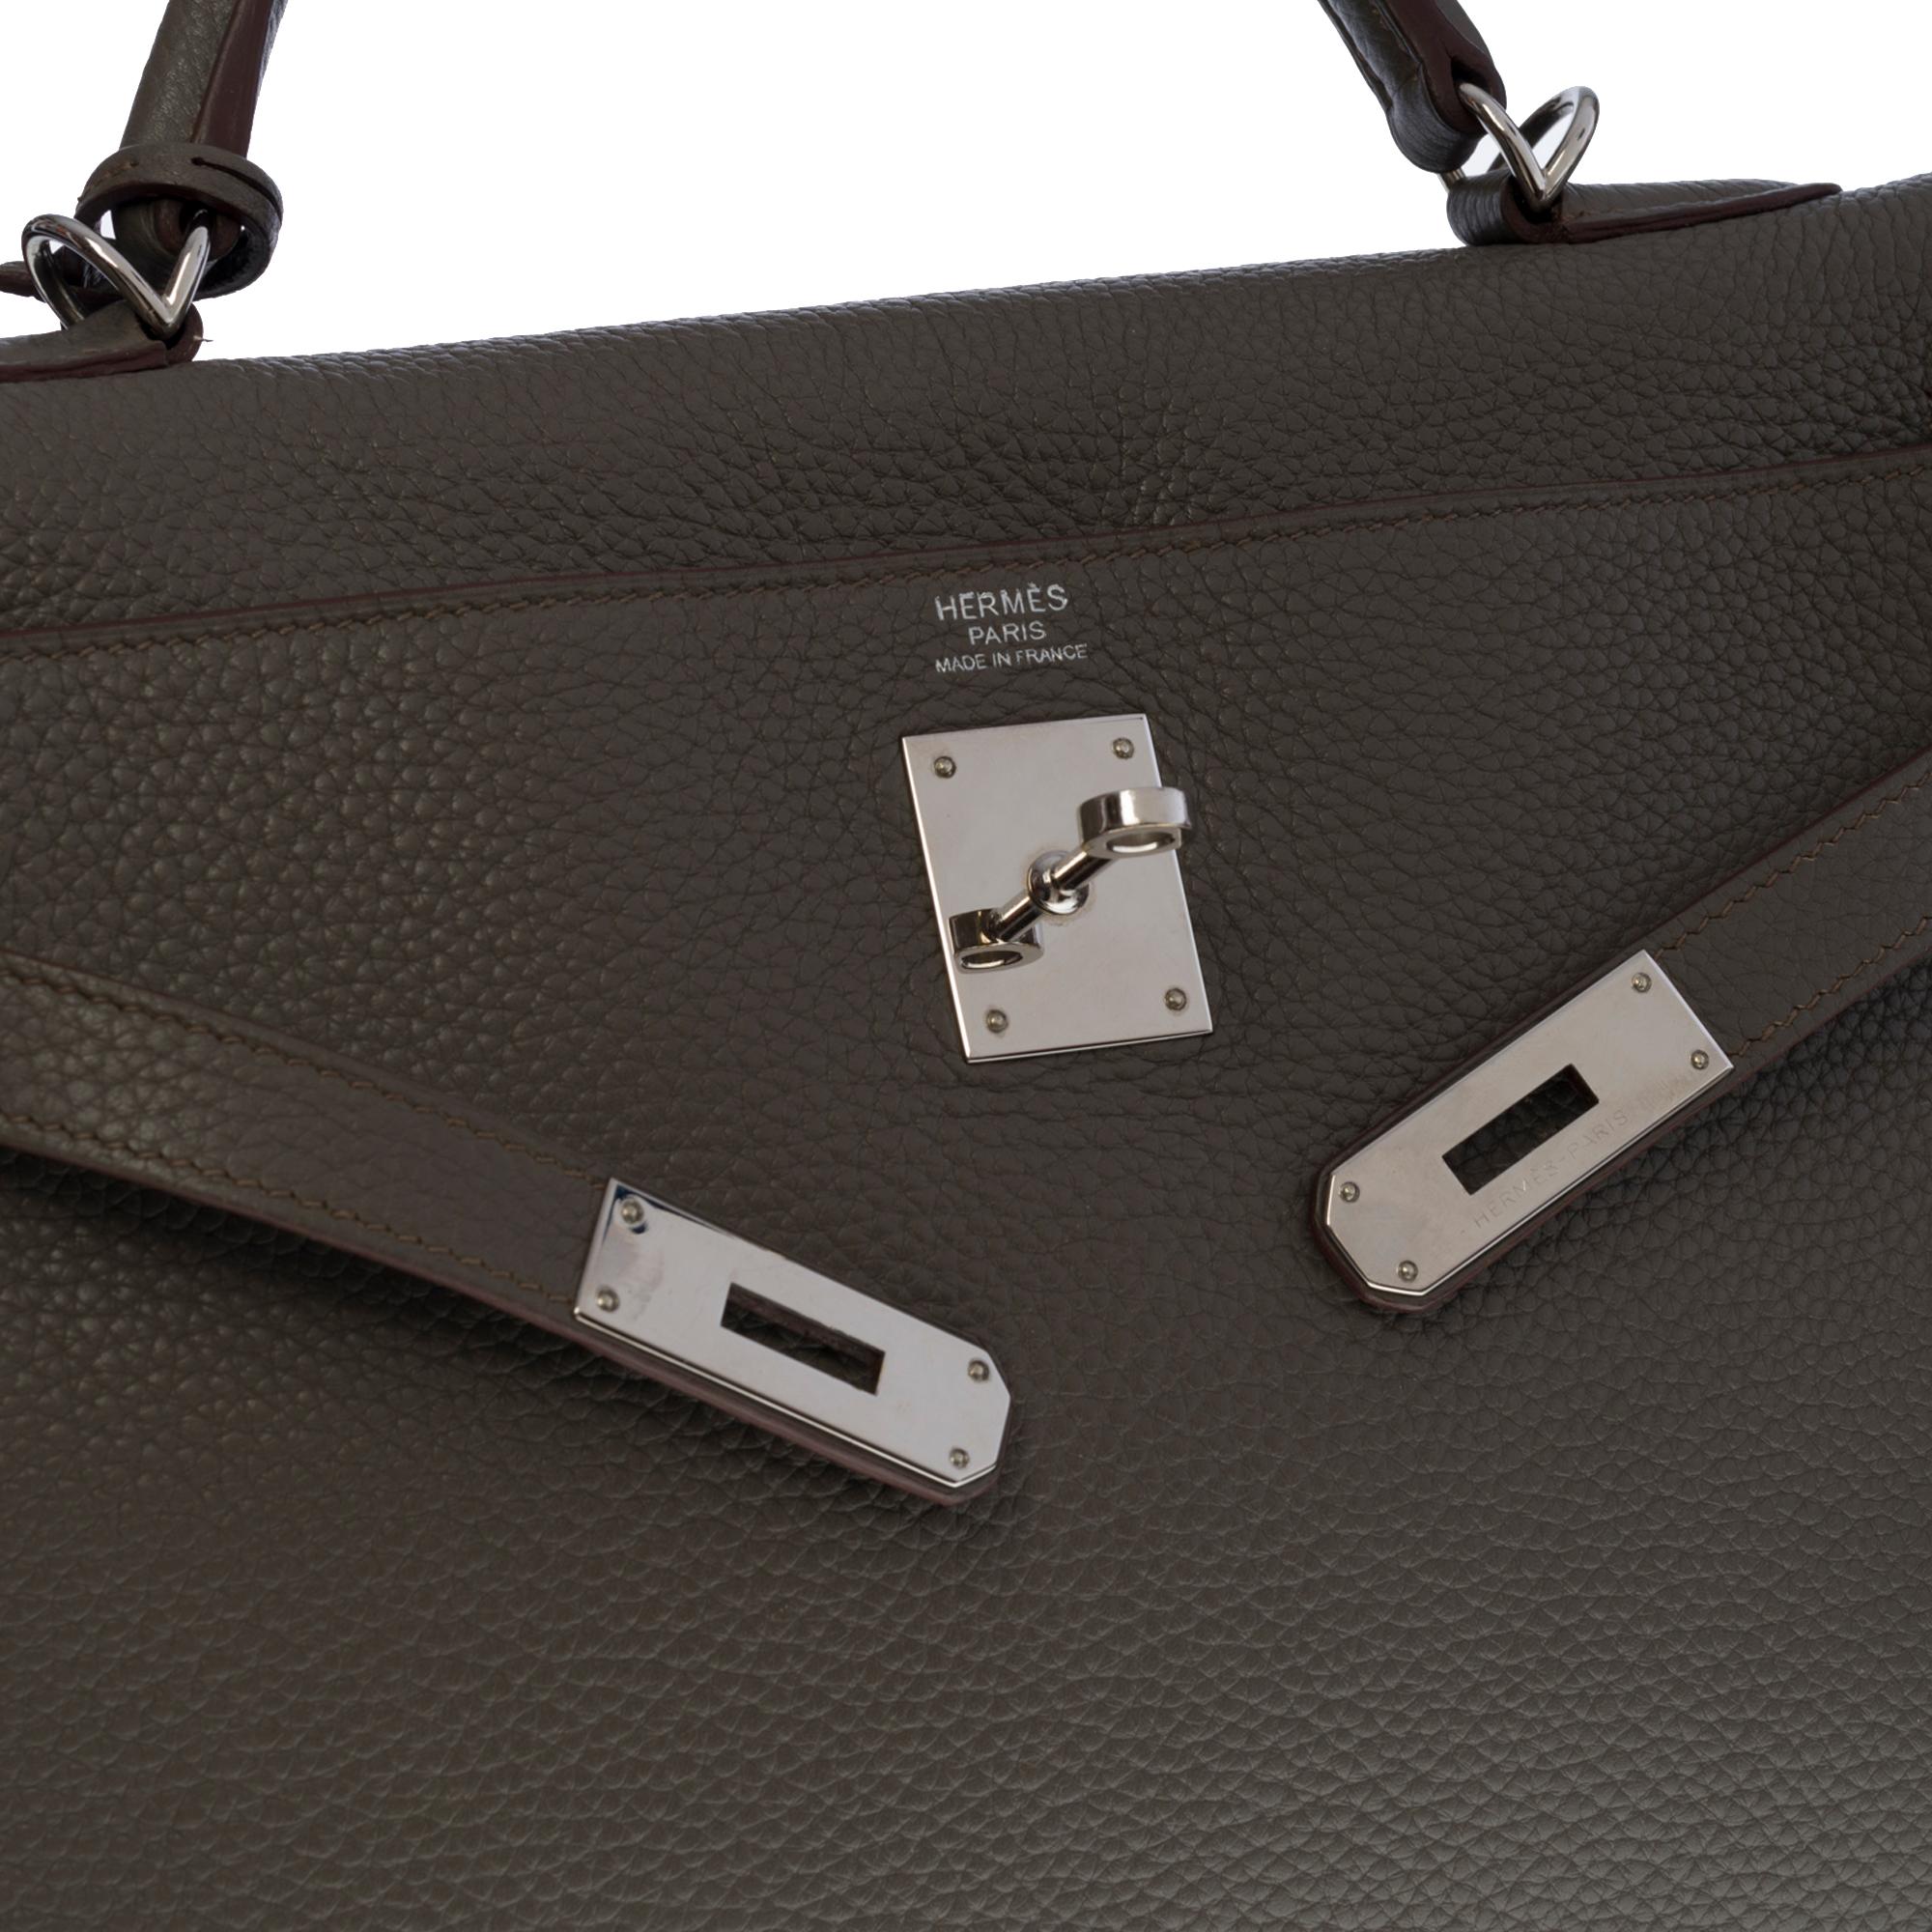 Gray Exquisite Hermès Kelly 32cm retourne handbag strap in Etain Togo leather, SHW